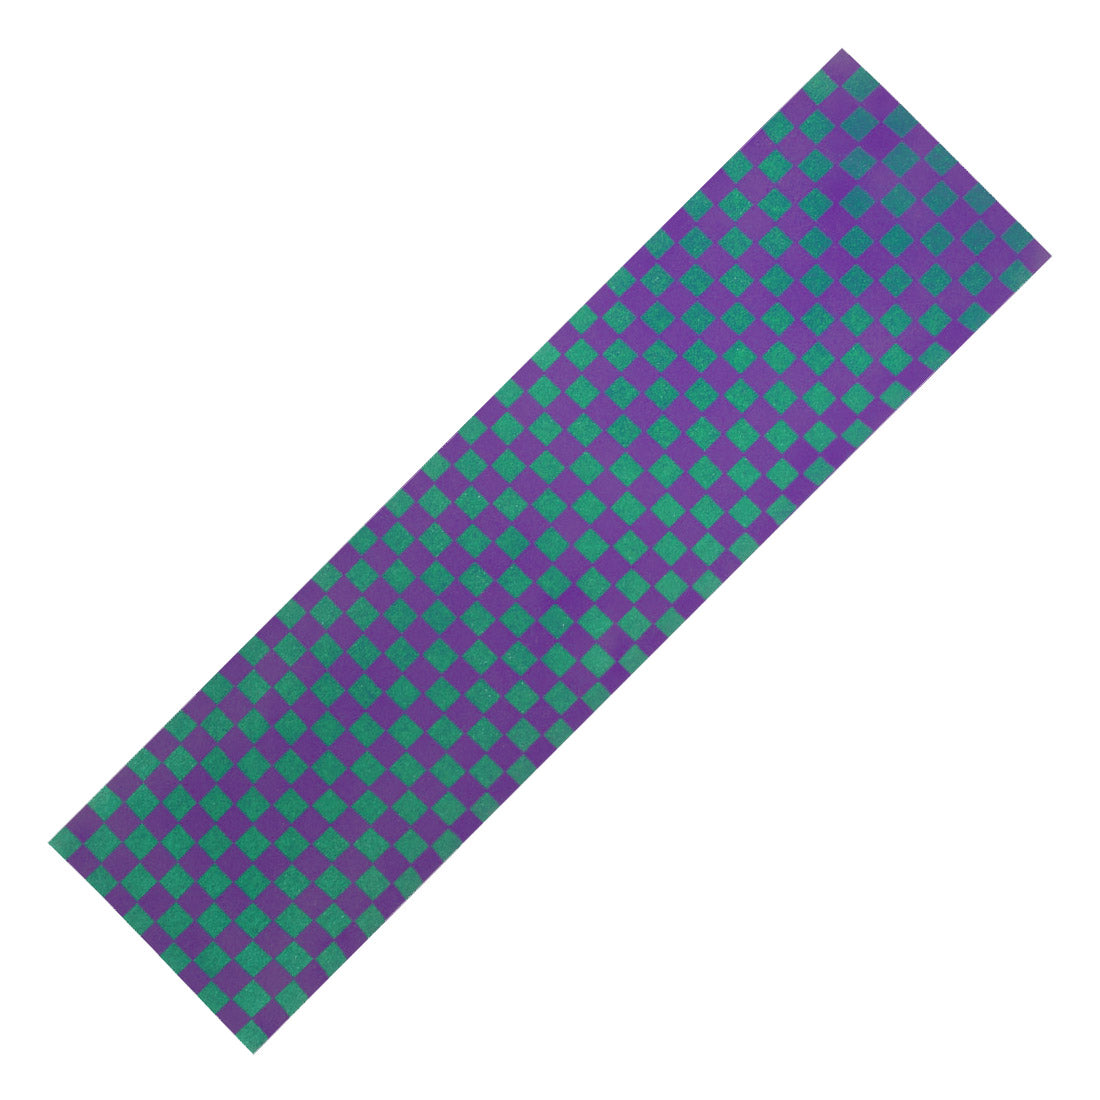 Fruity Griptape - Checkered Purple Green Check Griptape